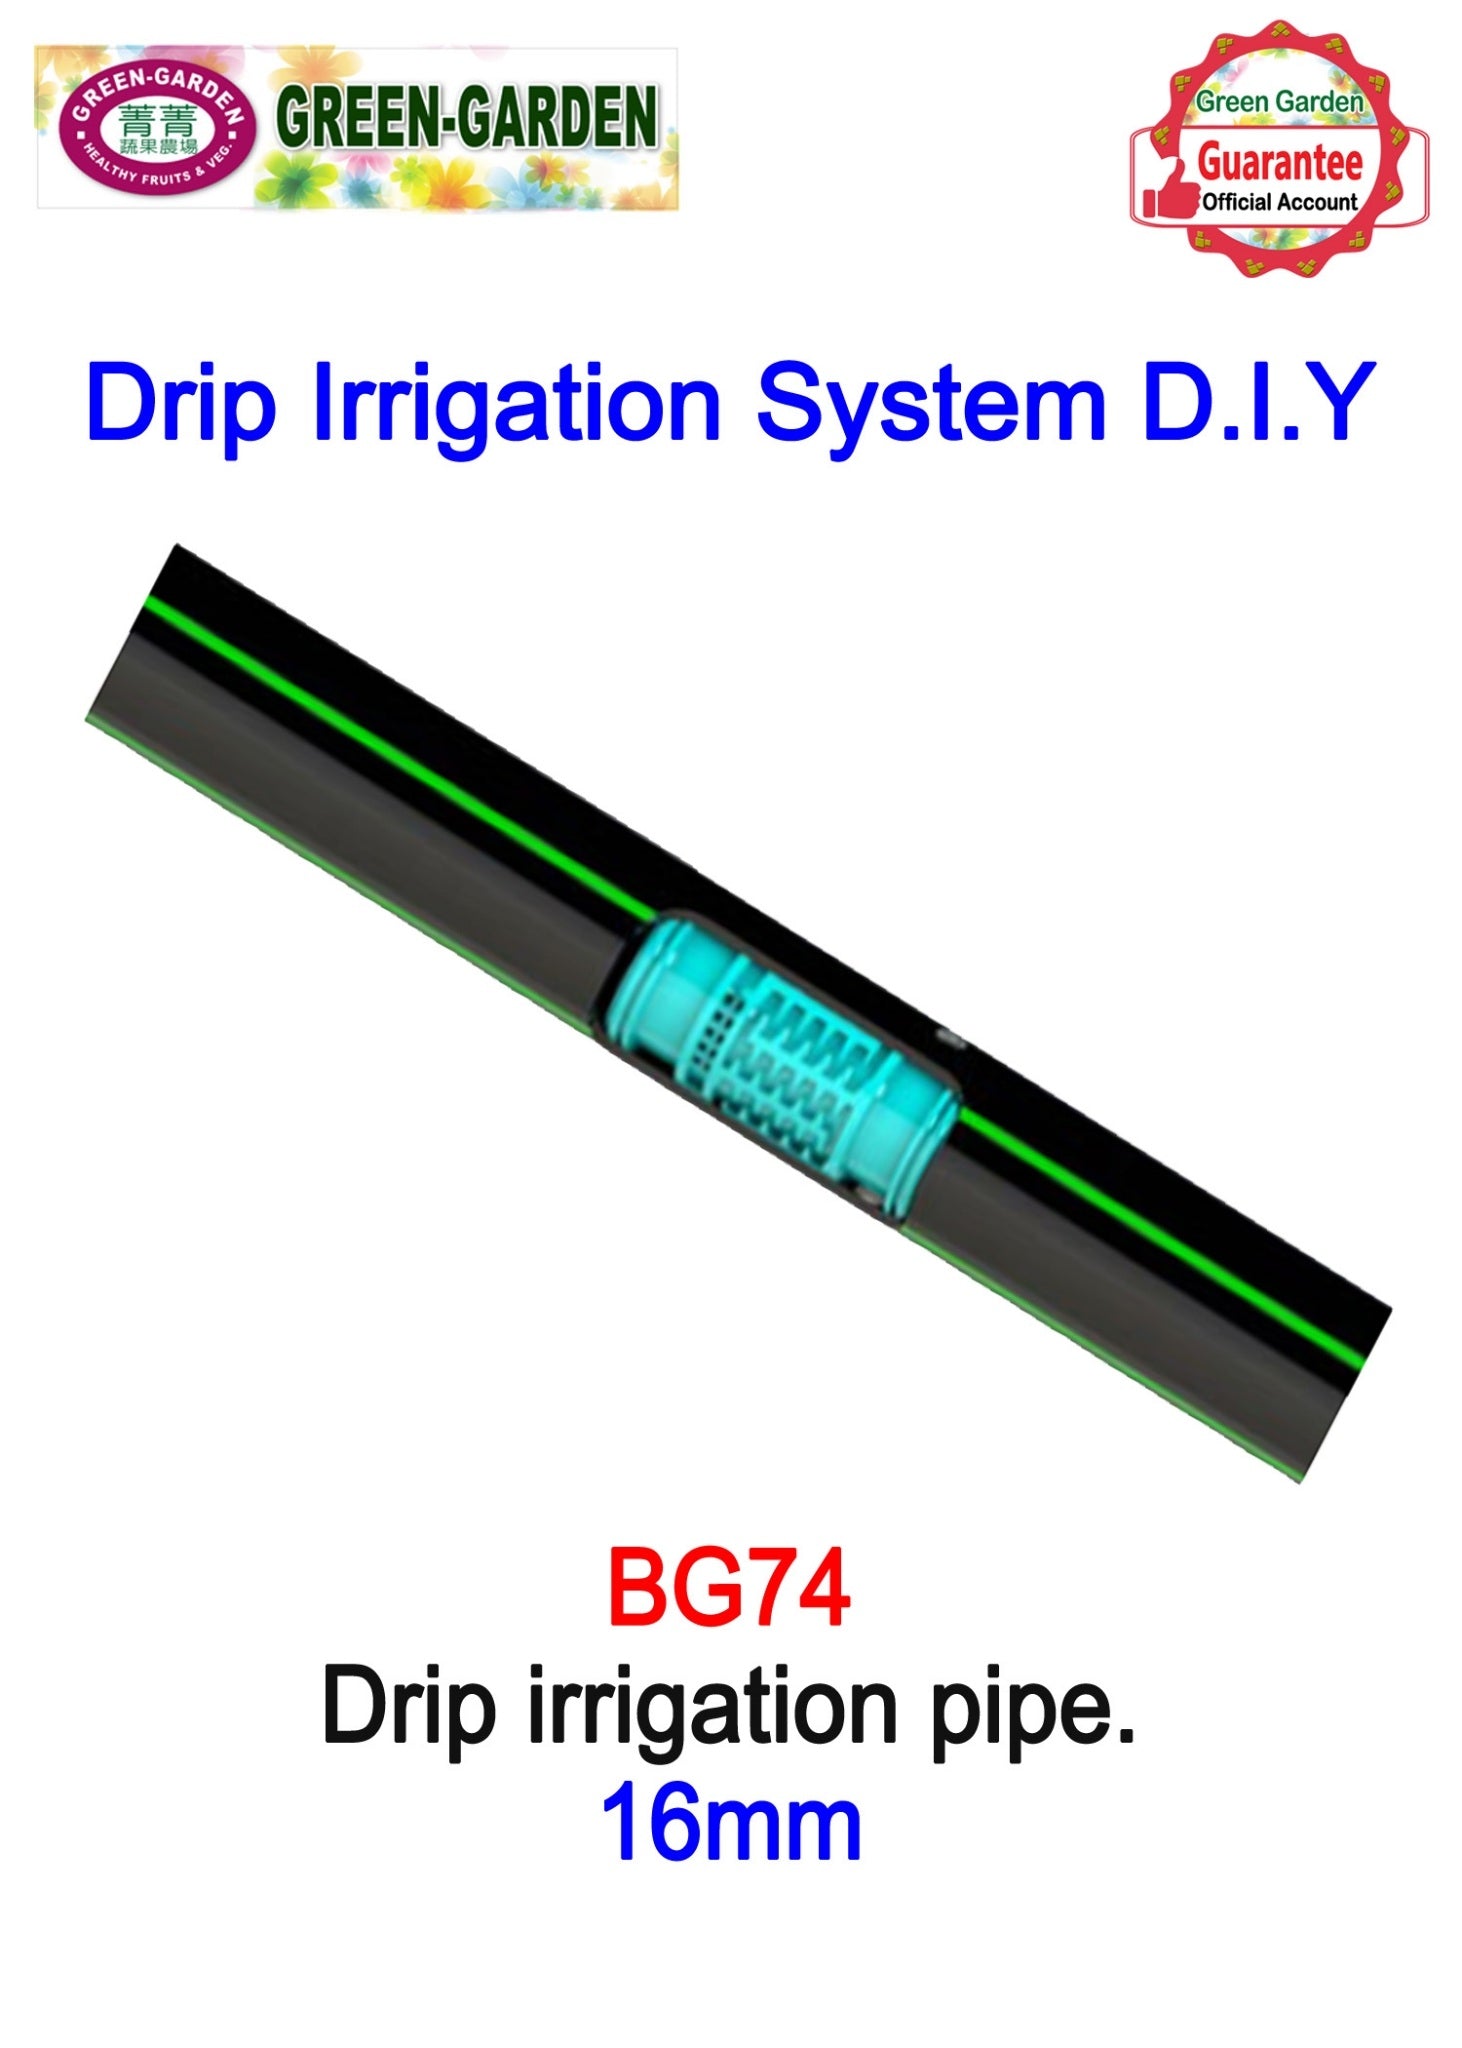 Drip Irrigation System - 16mm drip irrigation pipe BG74